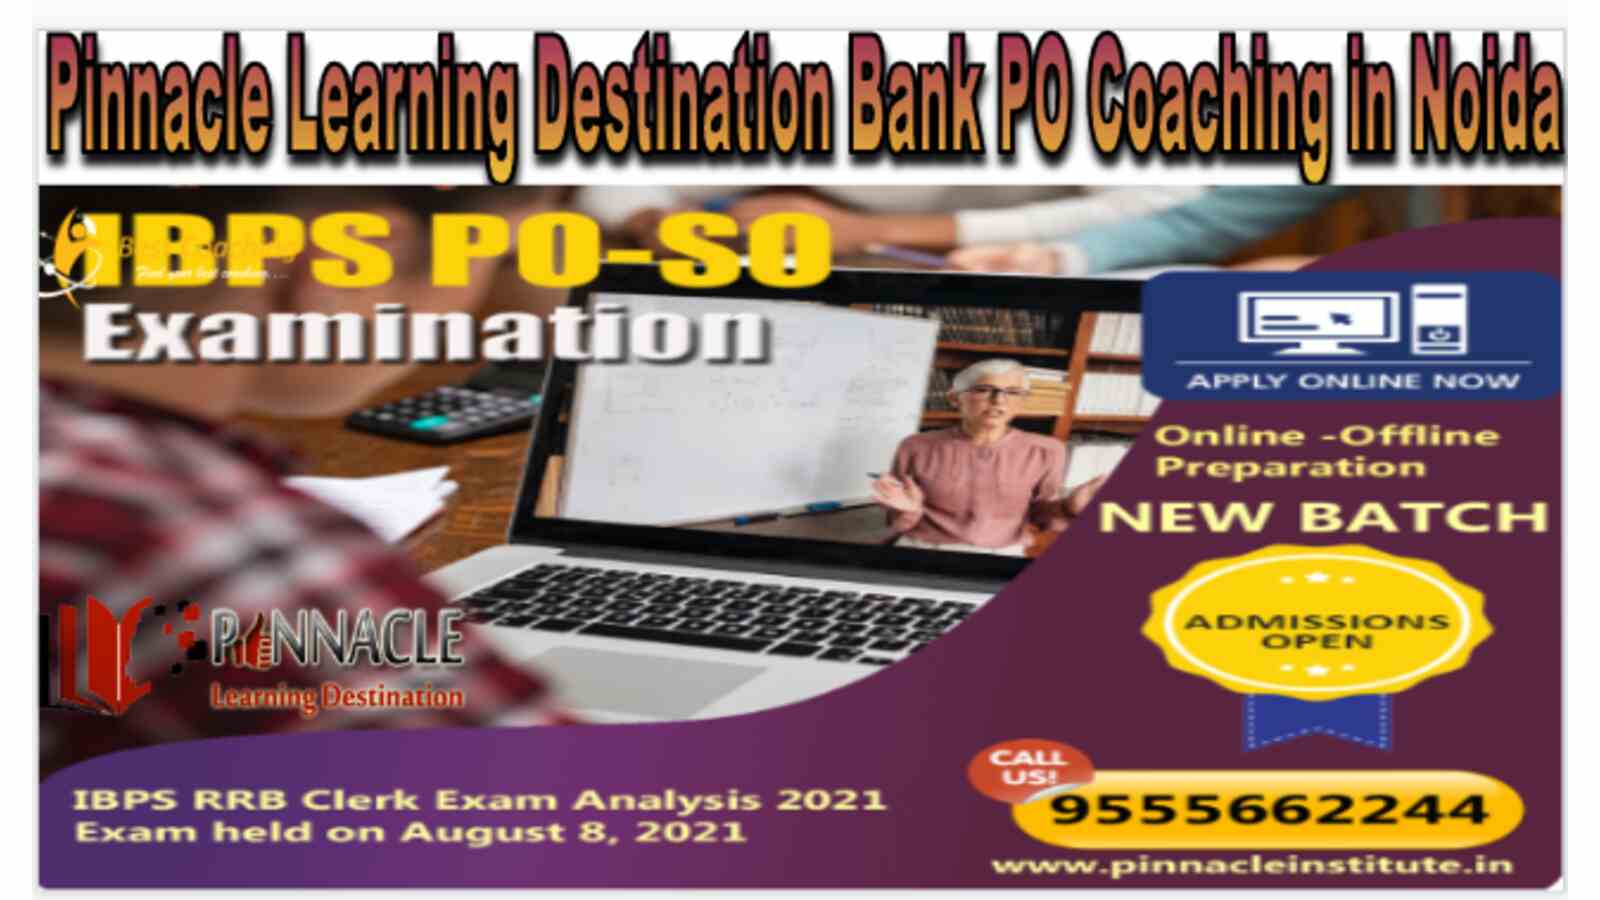 Pinnacle Learning Destination Bank PO Coaching in Noida